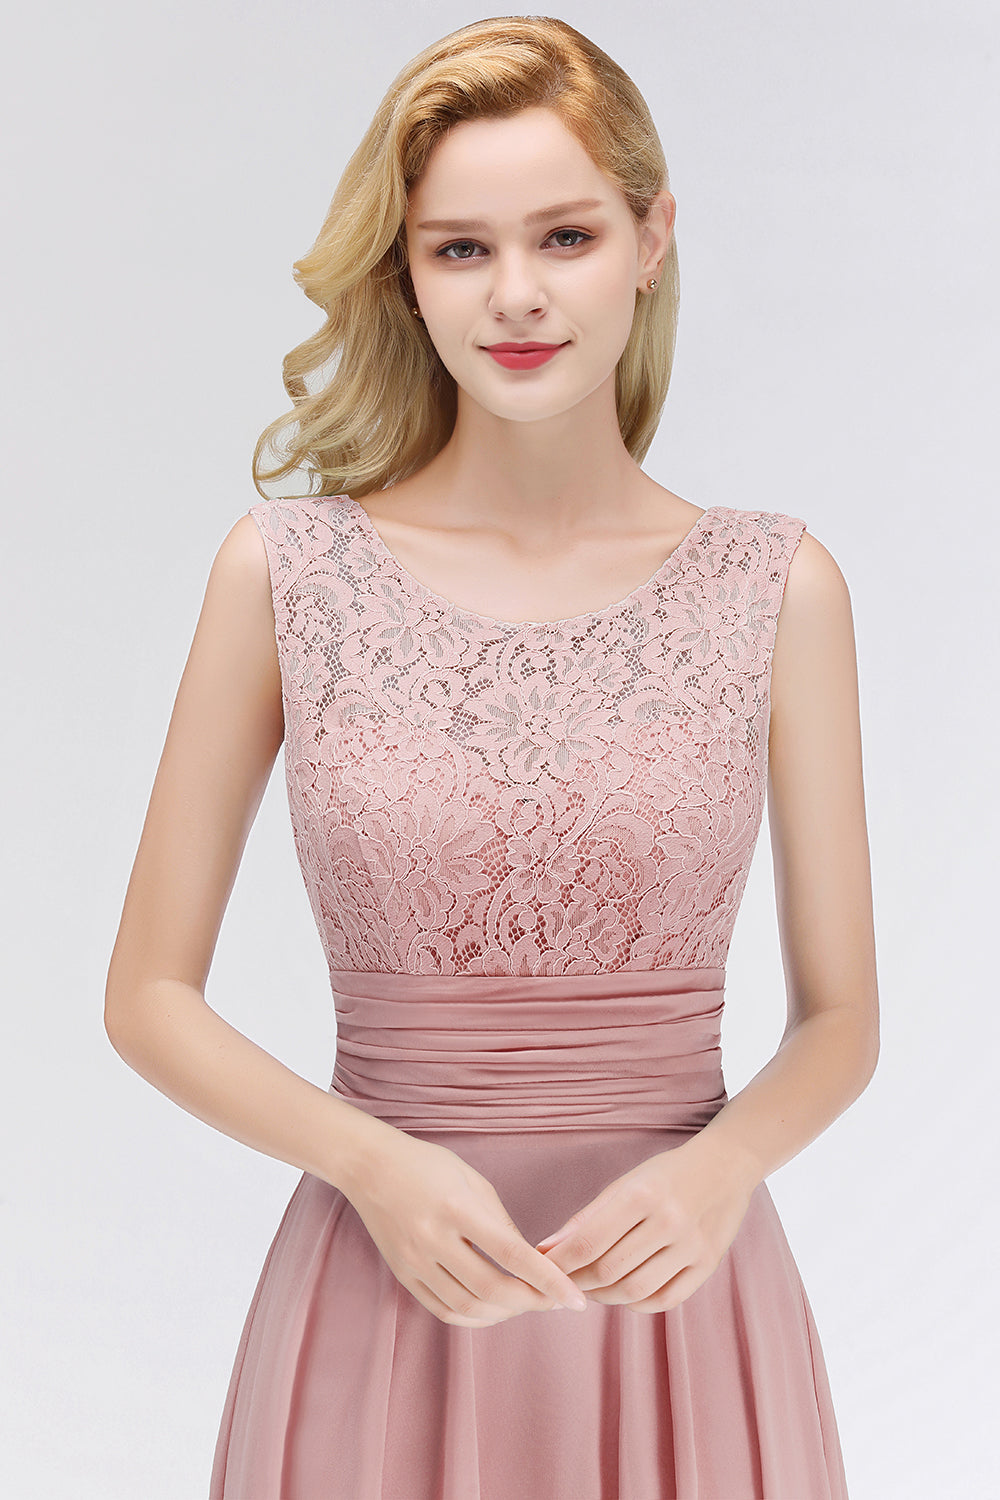 Elegant Lace Jewel Sleeveless Dusty Rose Bridesmaid Dress Online